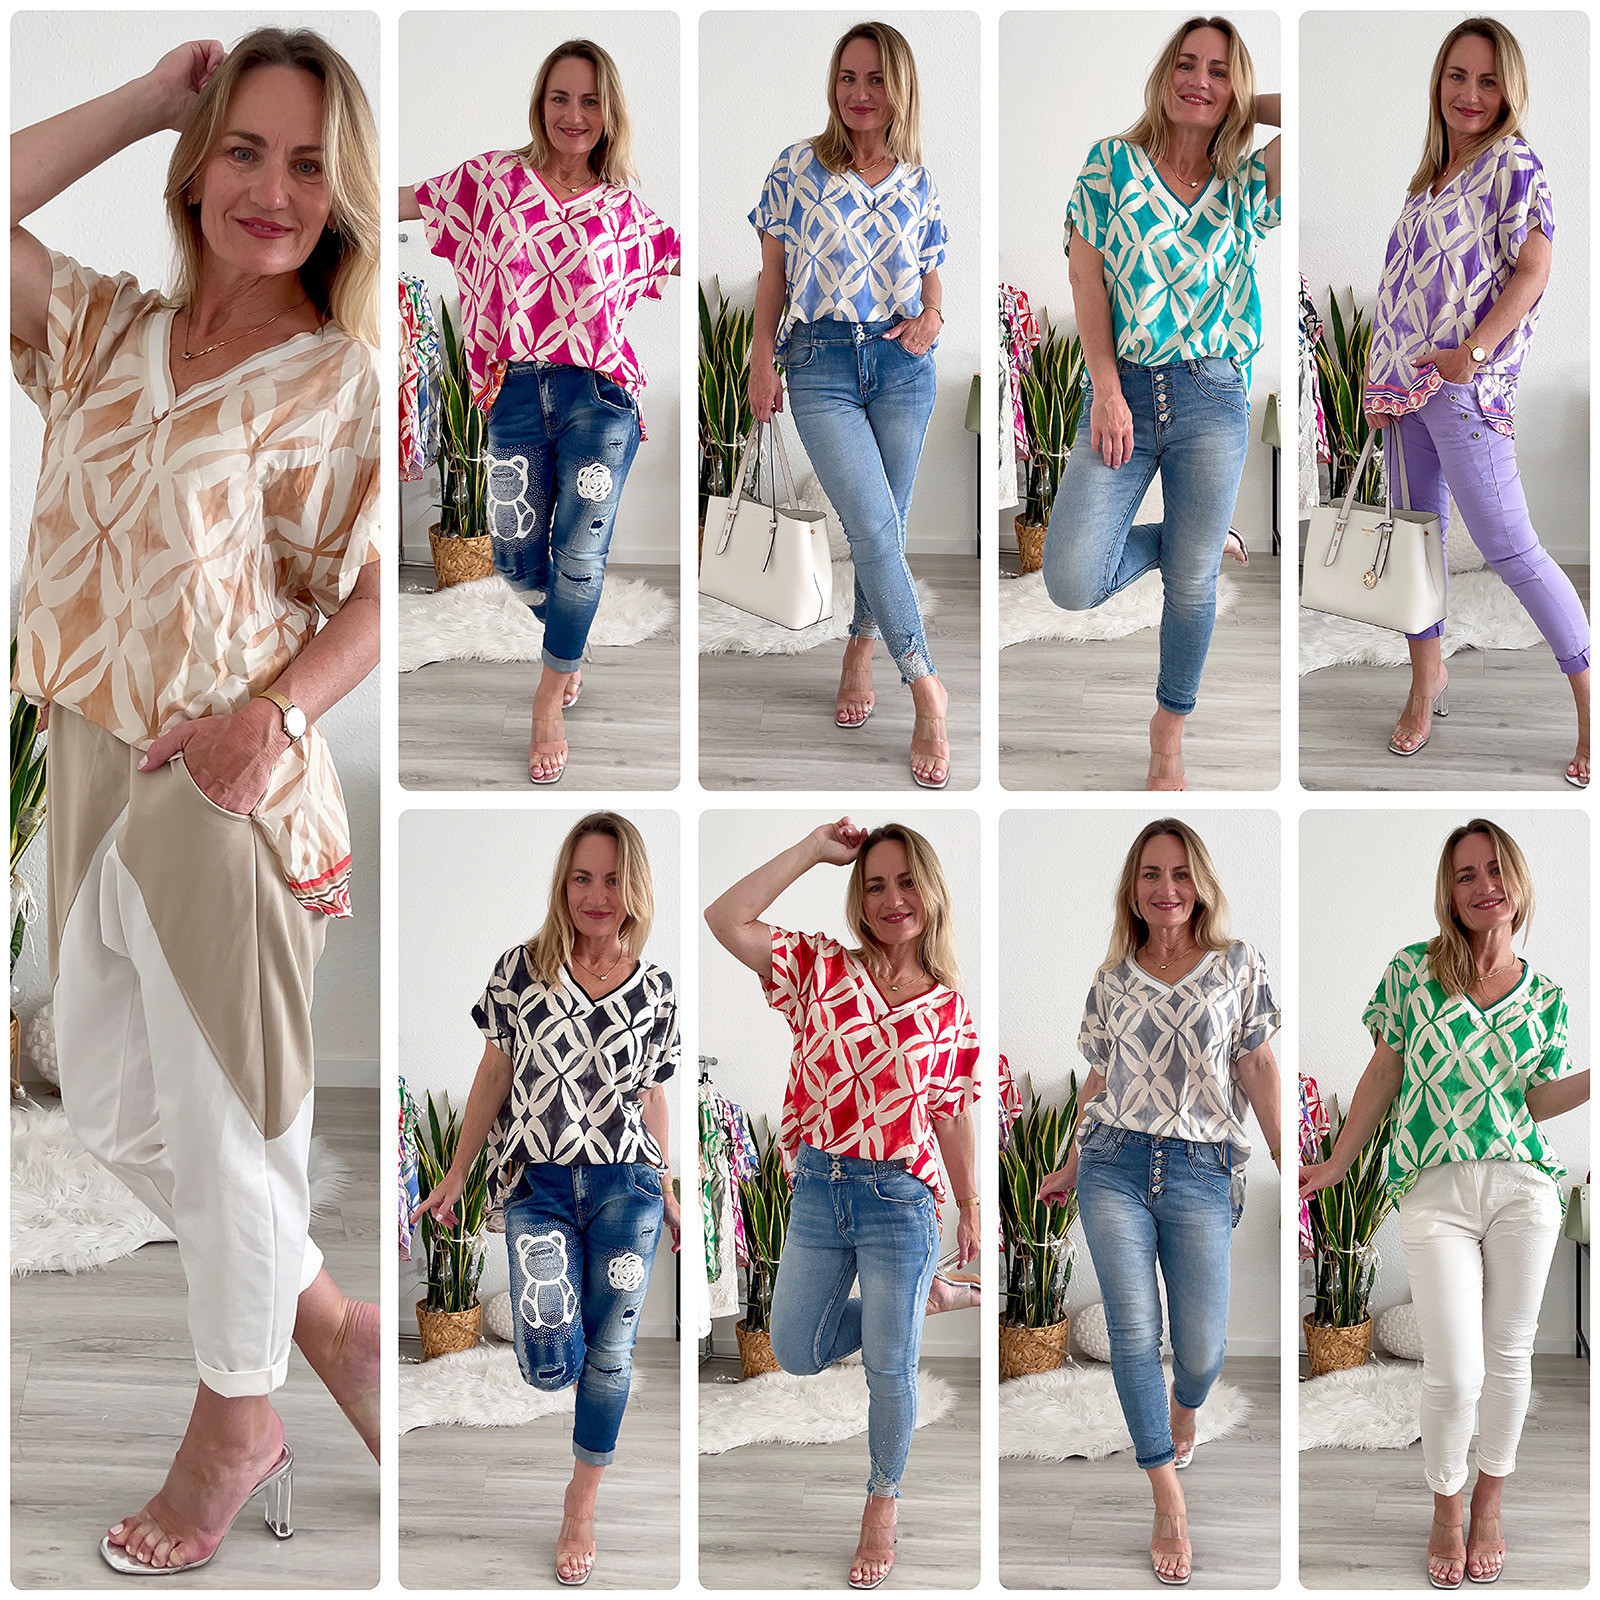 Made in Italy Damen Shirt Tunika ausgefallen new collection